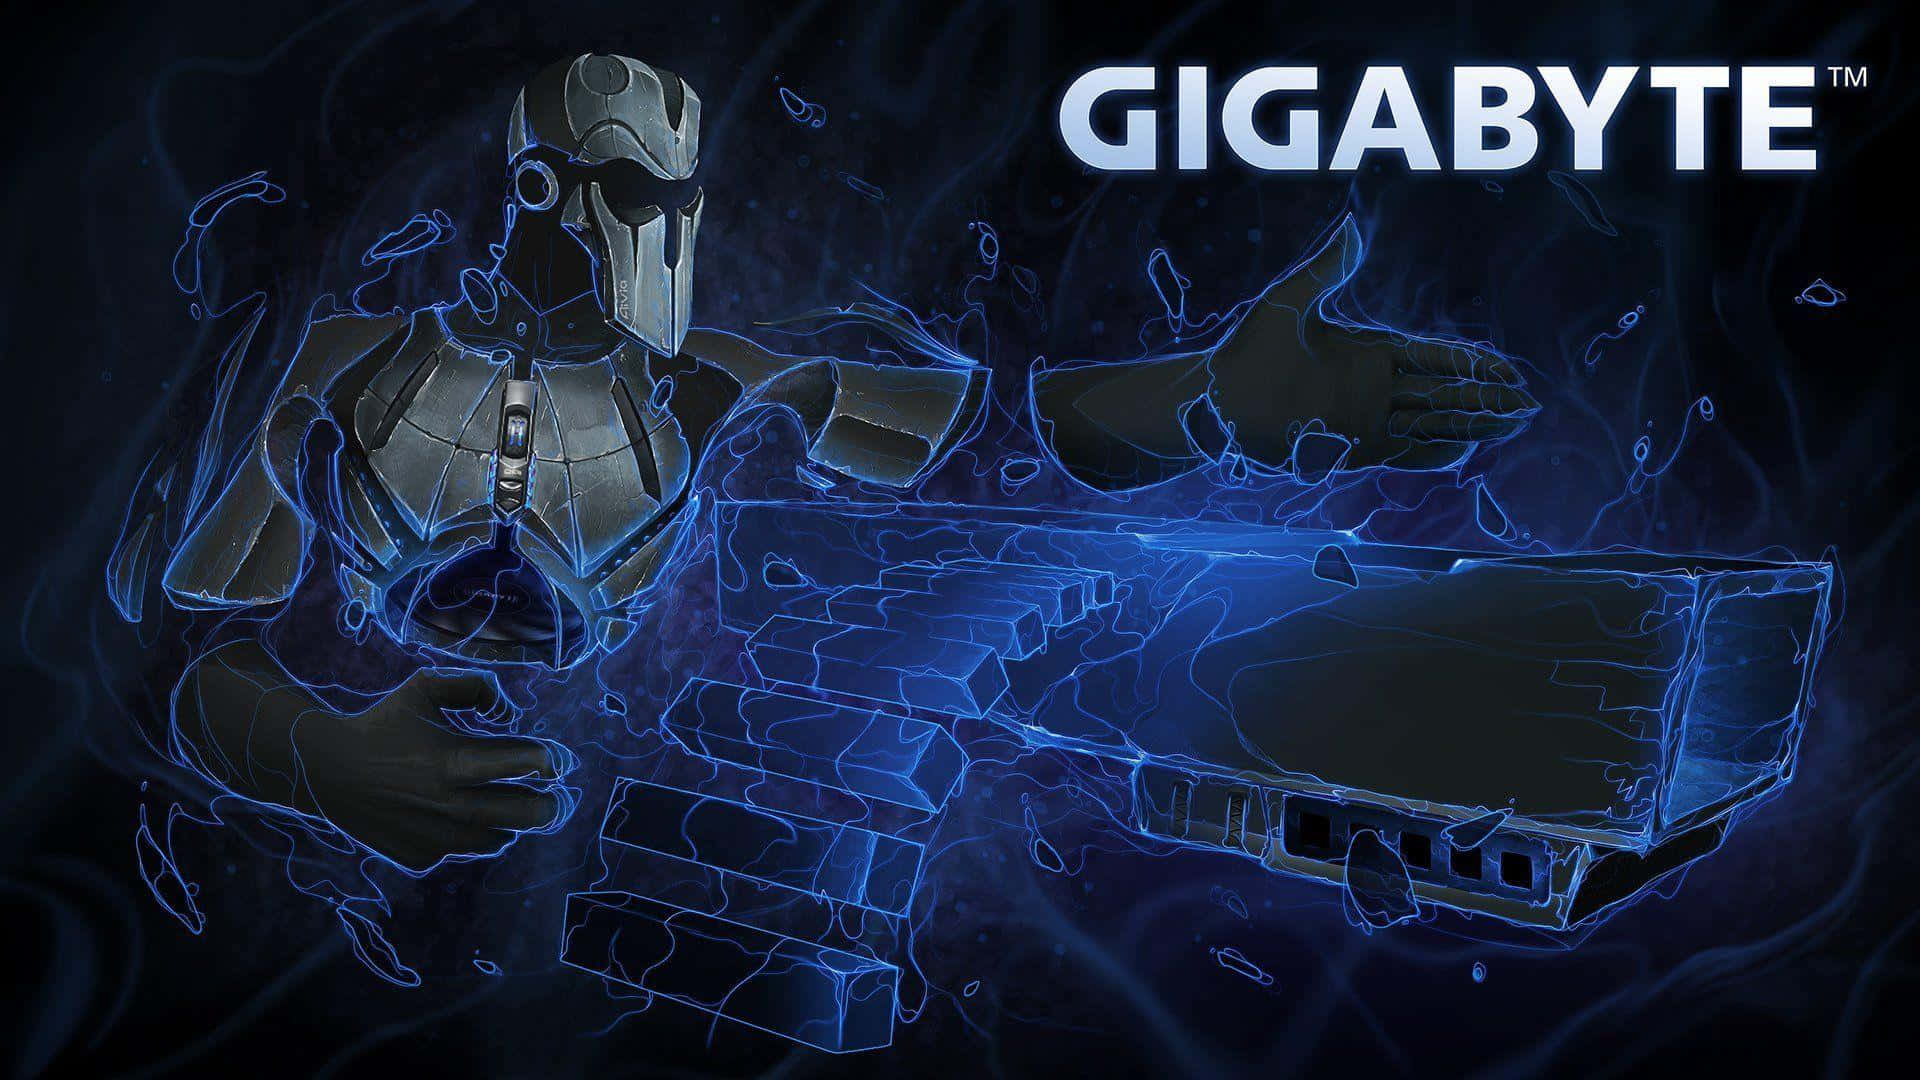 Gigabyte Cybernetic Armorand Motherboard Illustration Wallpaper